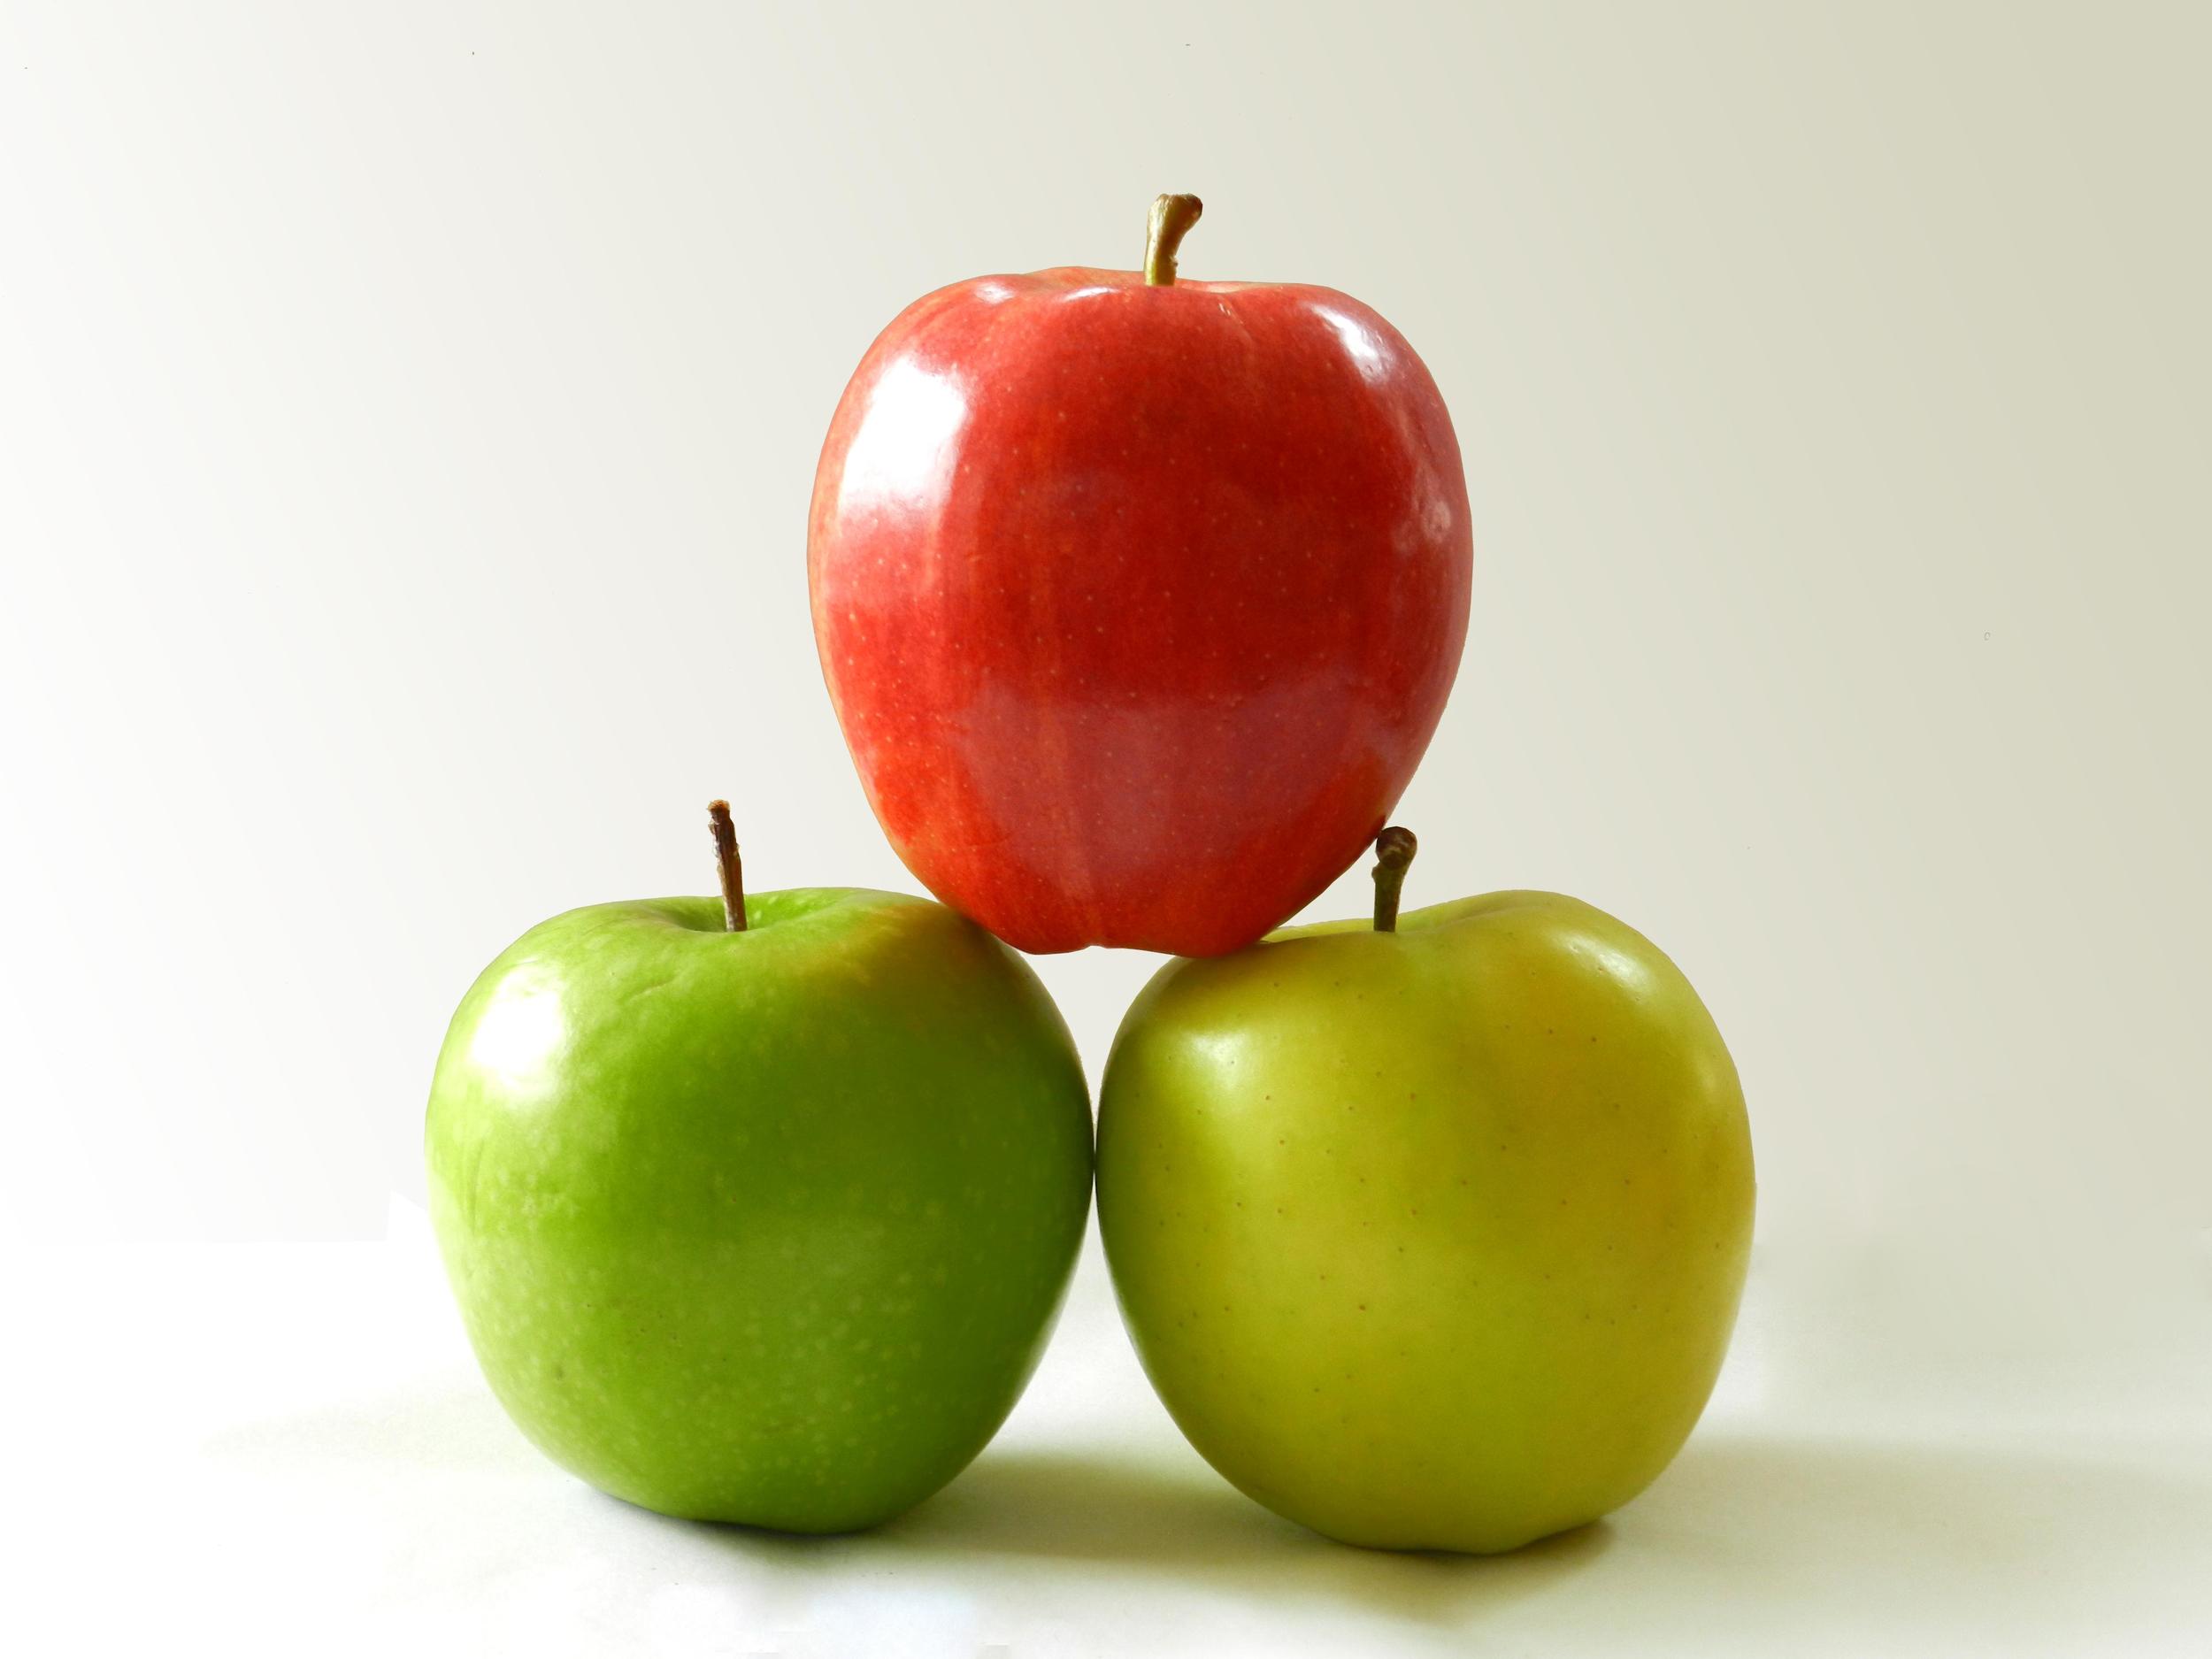 Включи 3 яблока. Два яблока. Разные яблоки. Яблоки разного цвета. Два разных яблока.